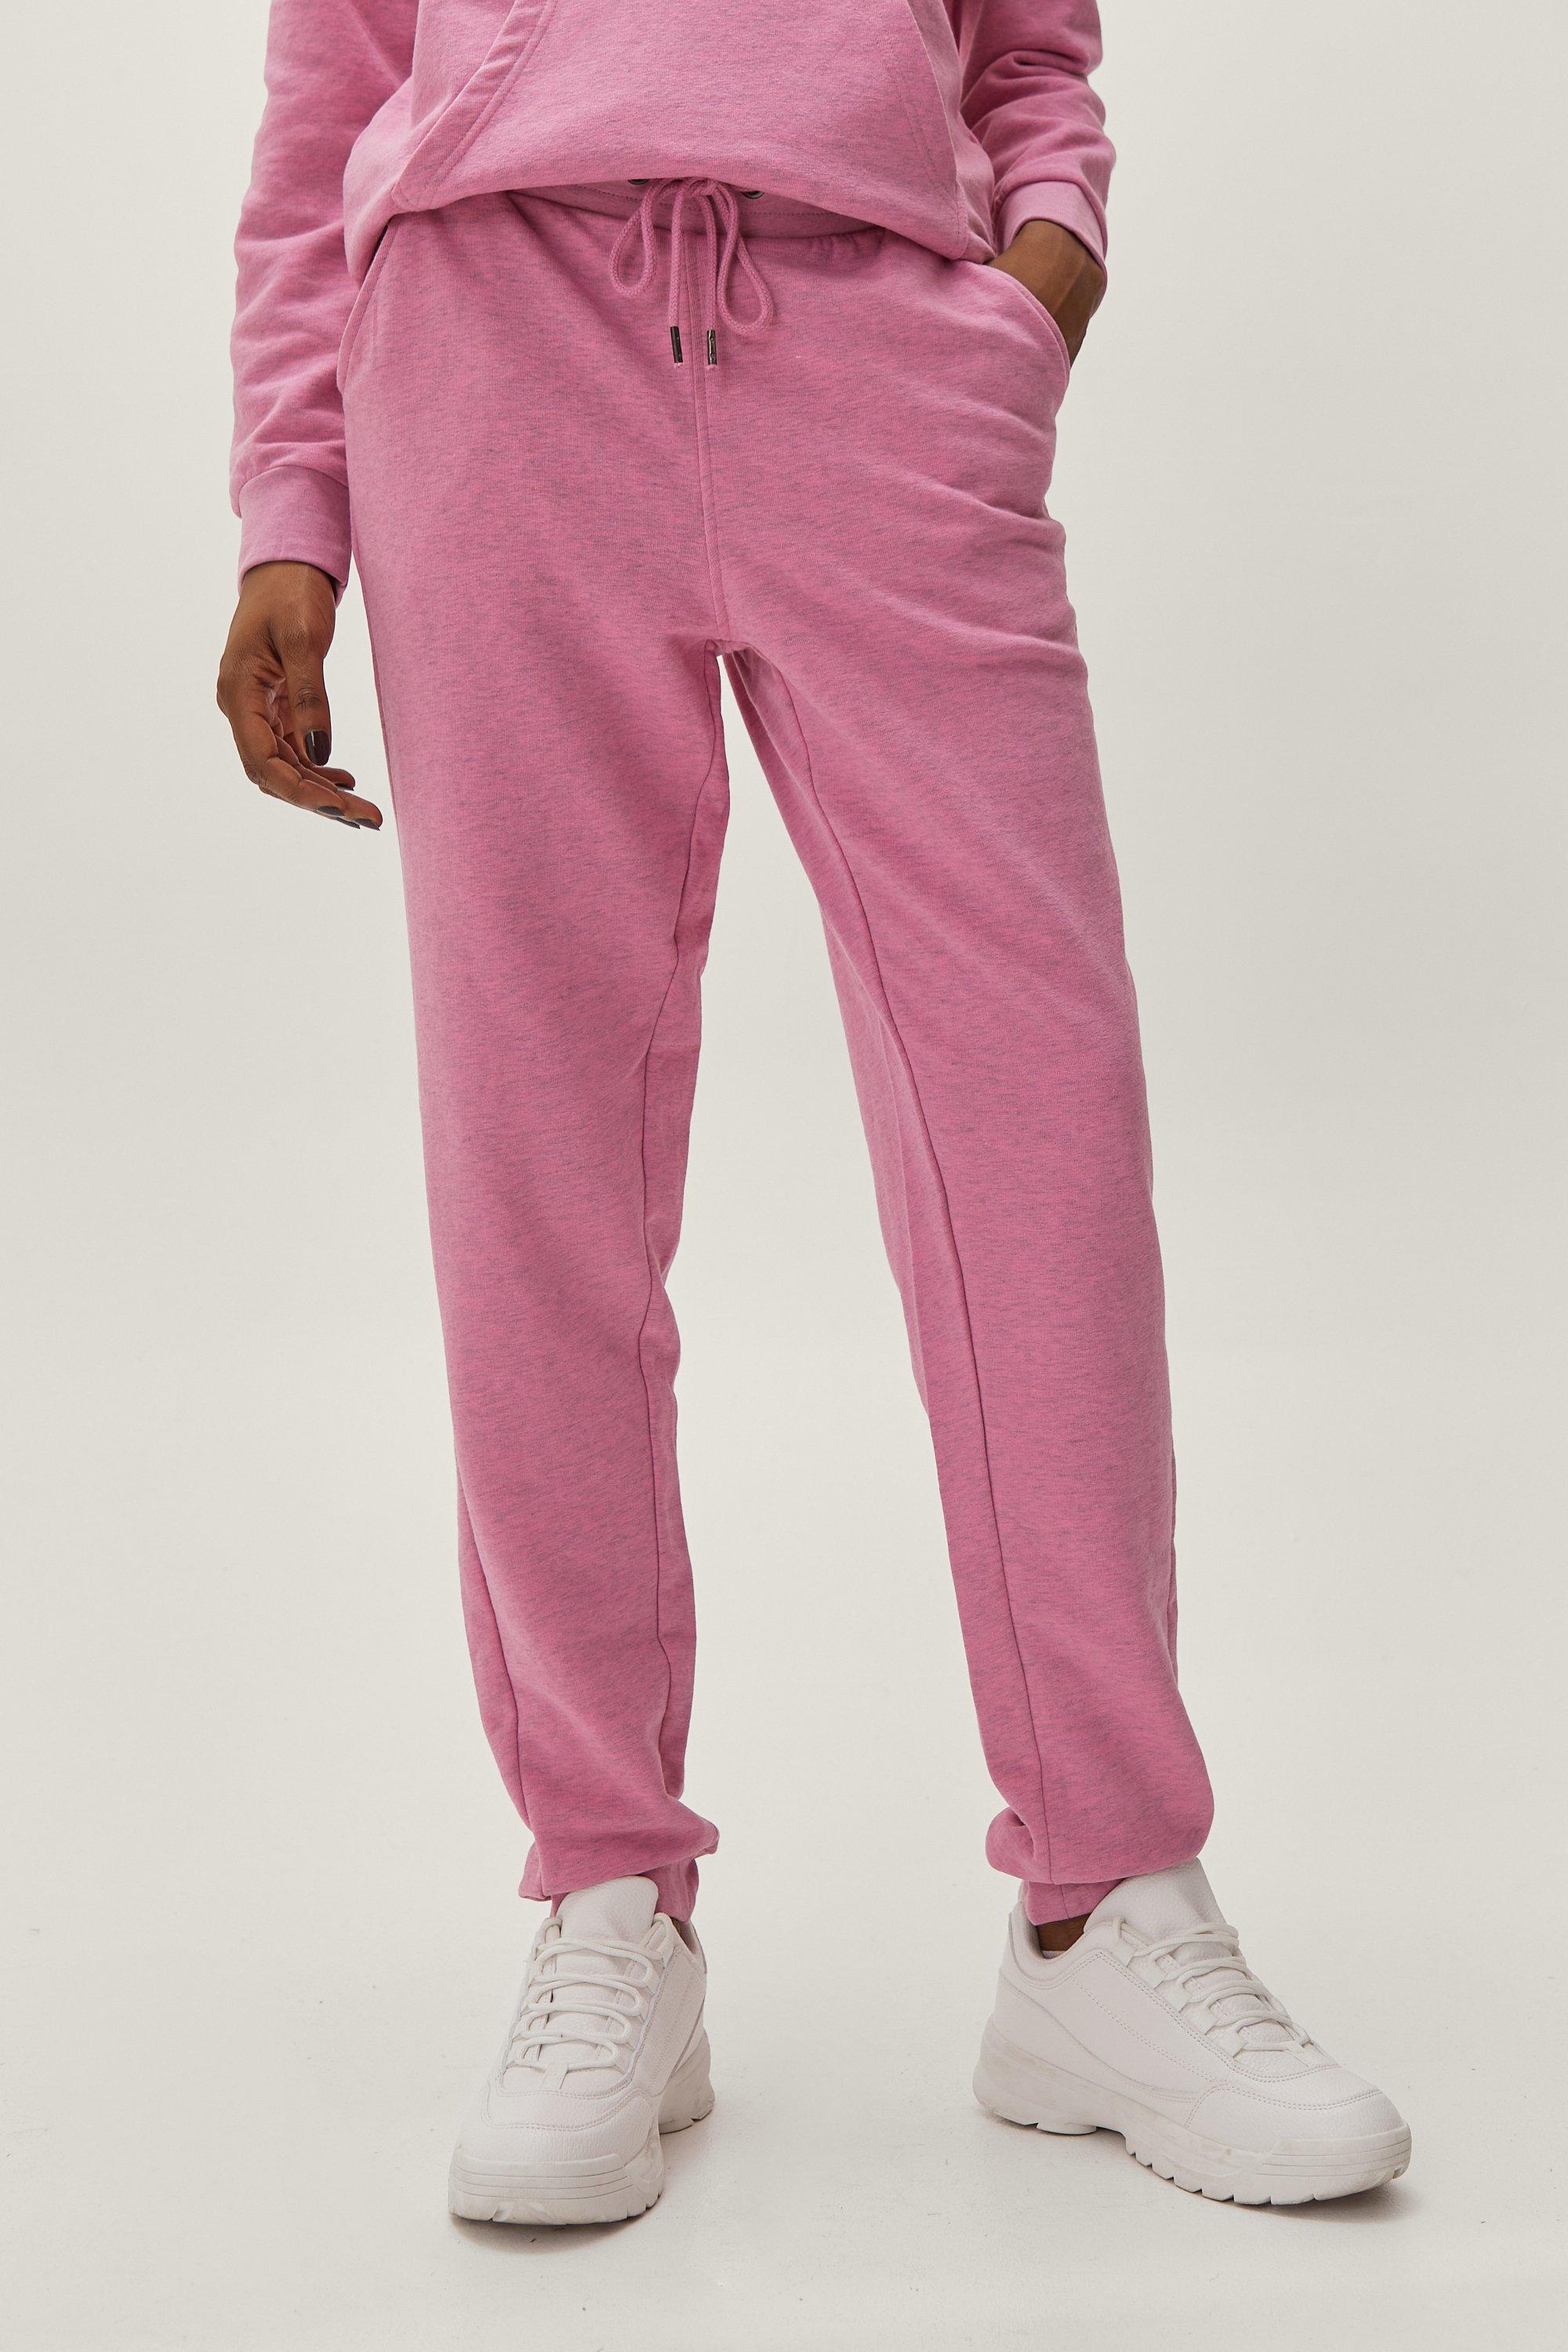 https://media.nastygal.com/i/nastygal/agg16343_pink_xl_2/pink-basic-cuffed-sweatpants